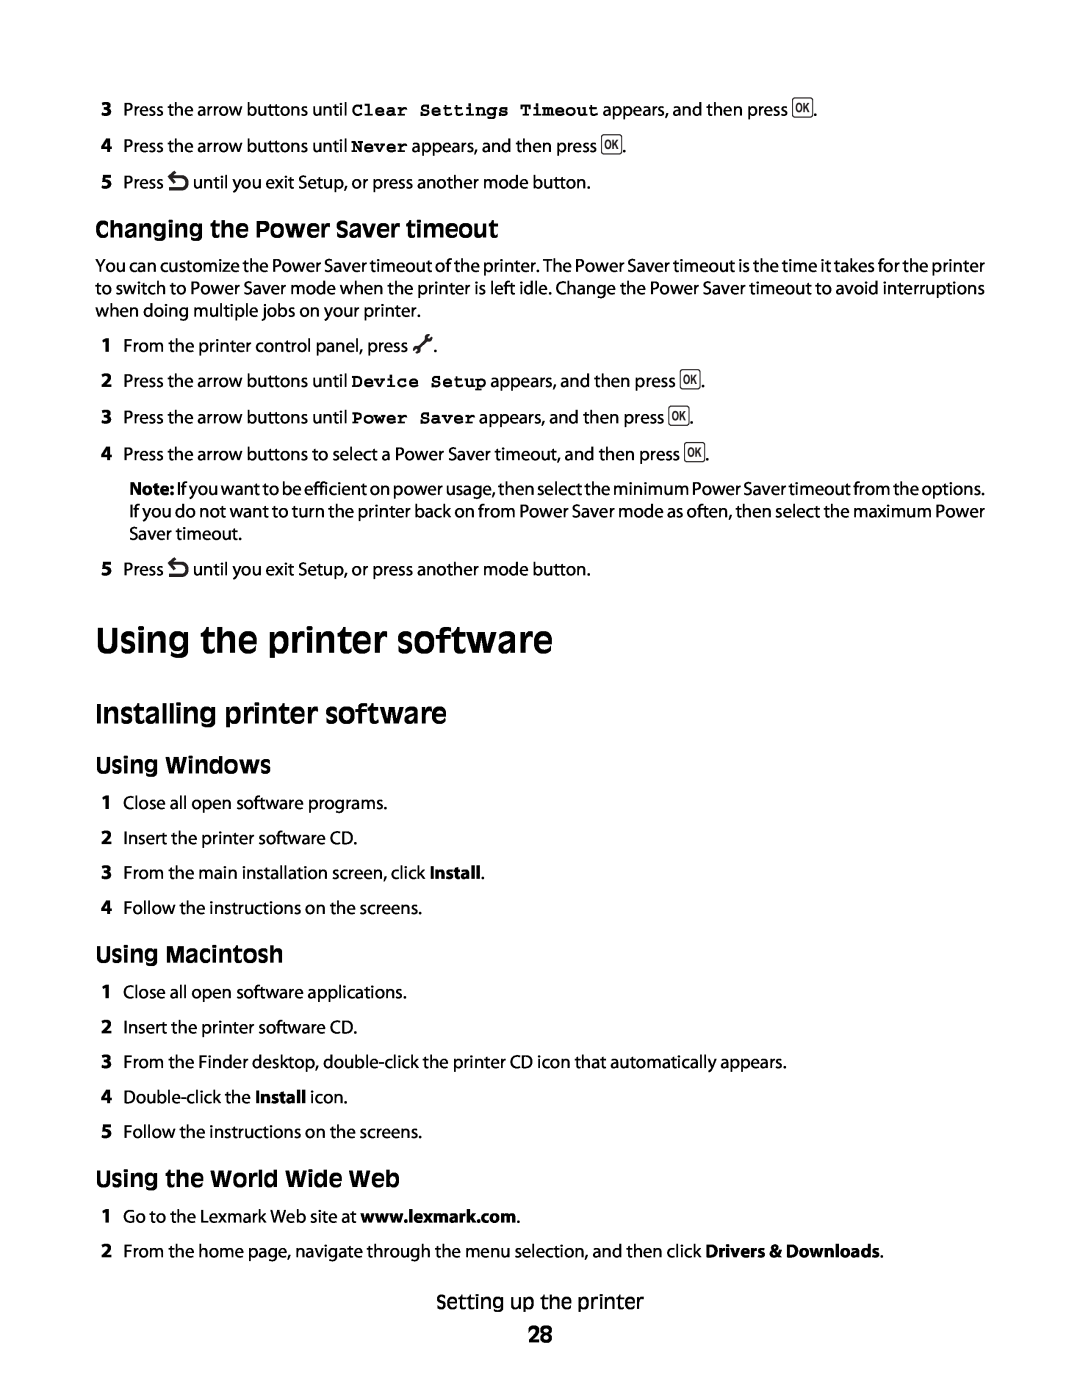 Lexmark 4600 Using the printer software, Installing printer software, Changing the Power Saver timeout, Using Windows 